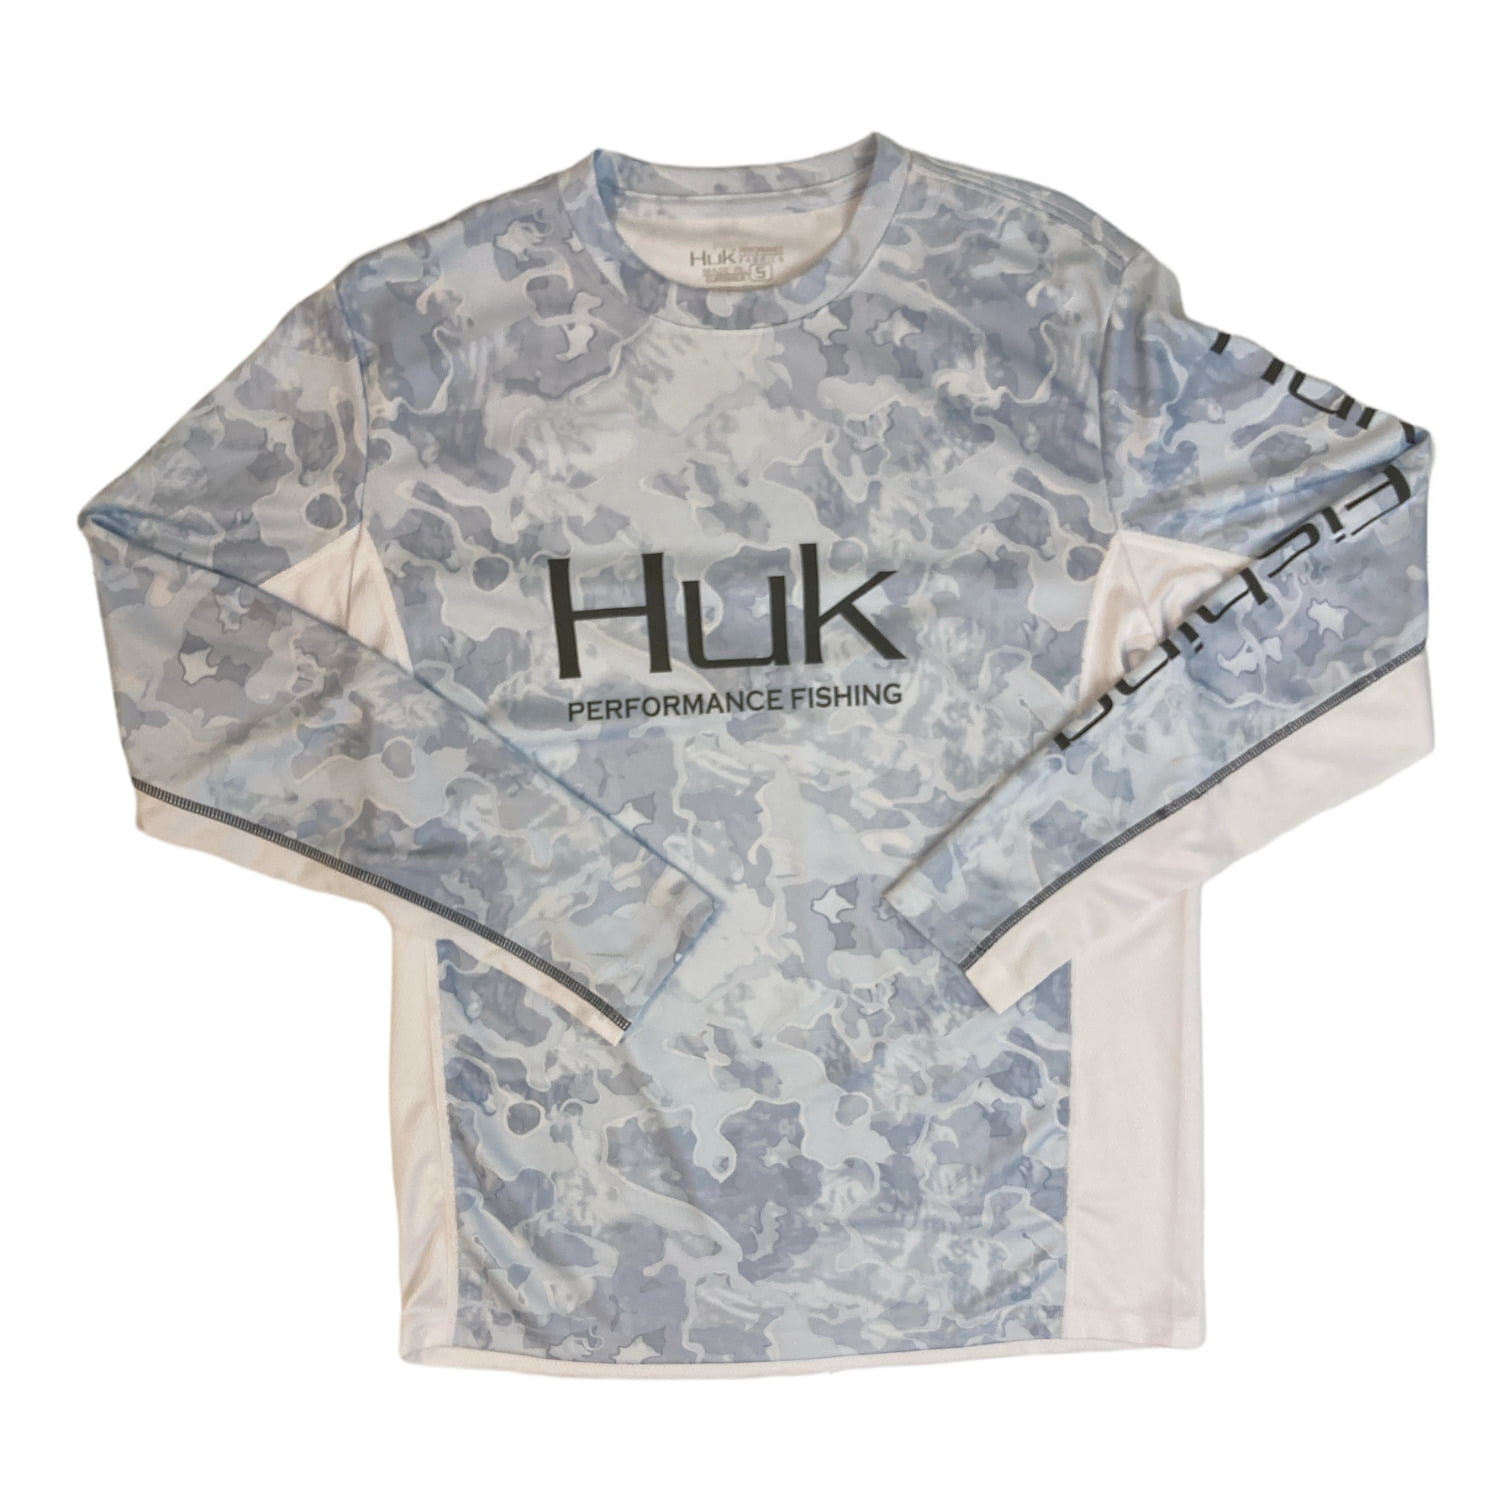 Huk Men's Icon X Performance Long Sleeve Fishing Shirt (Sea Floor, XXL)